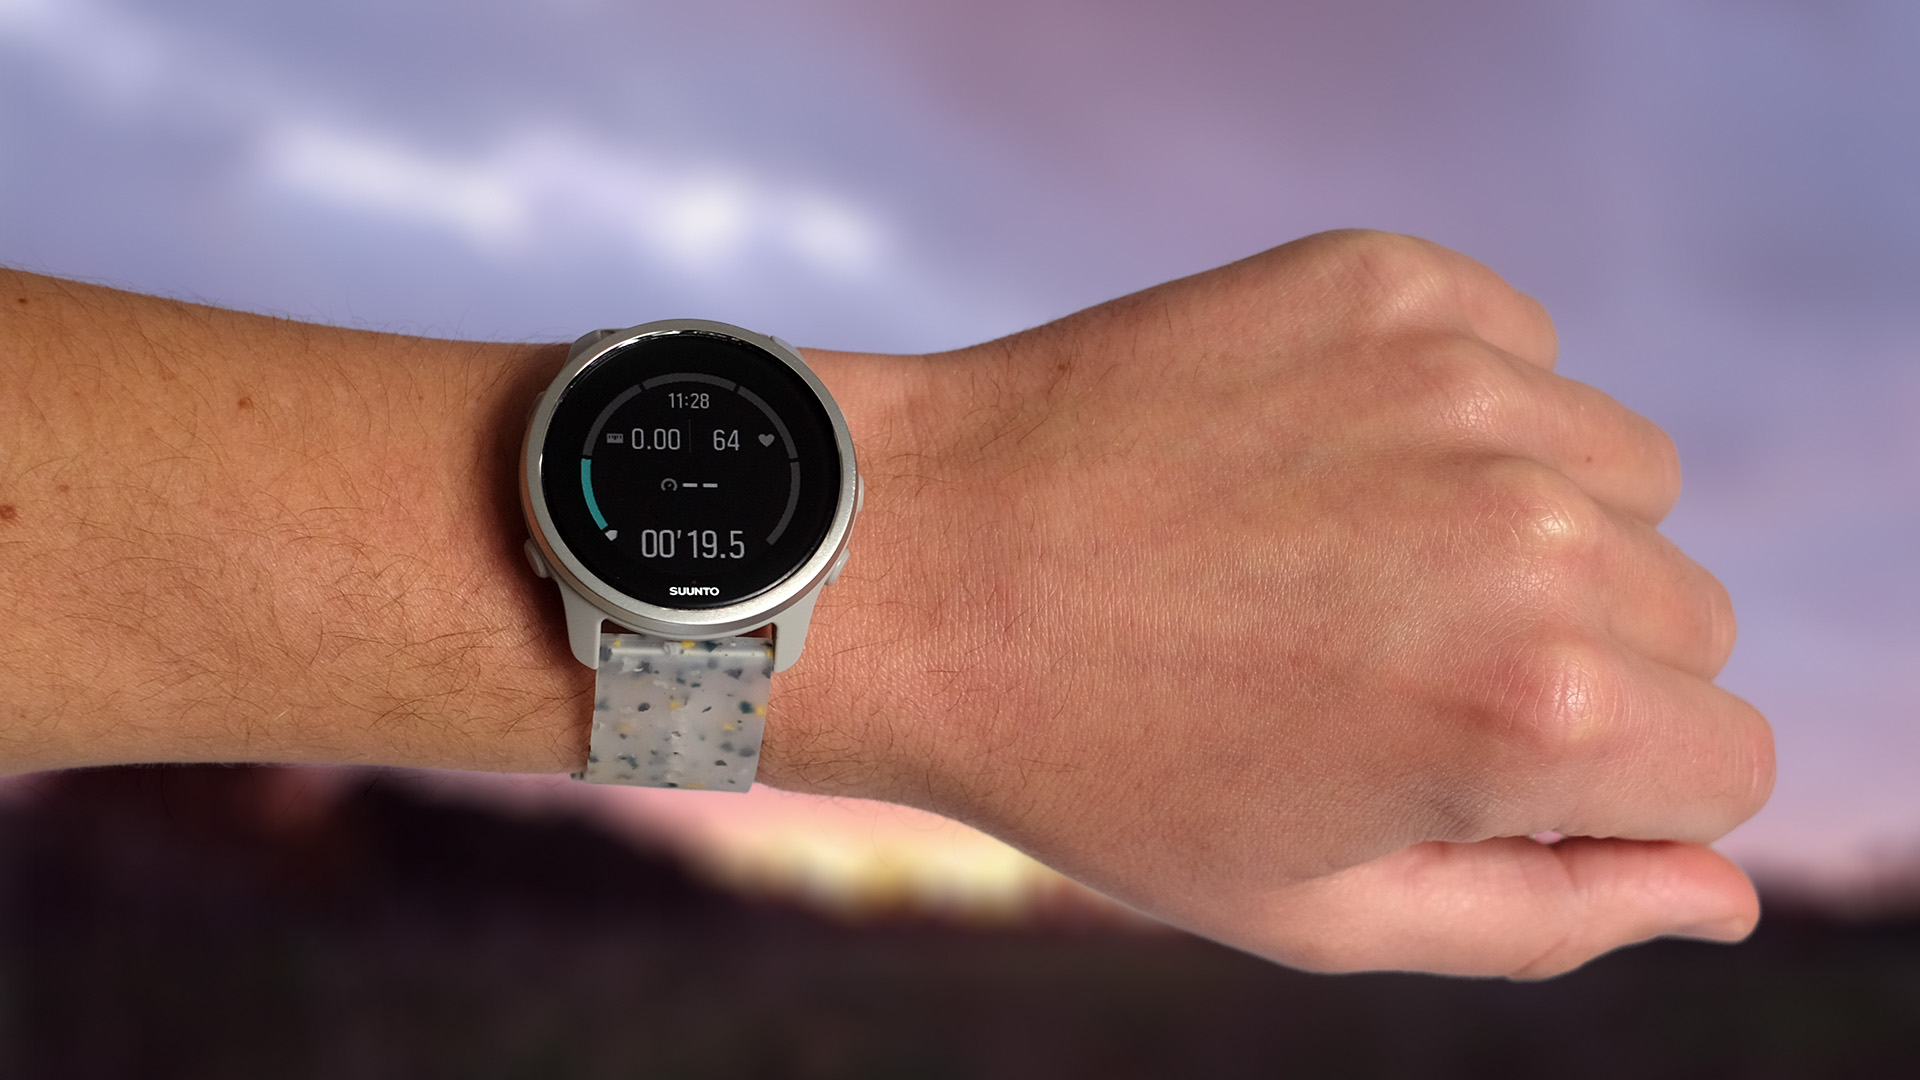 Suunto 5 Peak review: a sleek, sub-40g runner's watch with a few